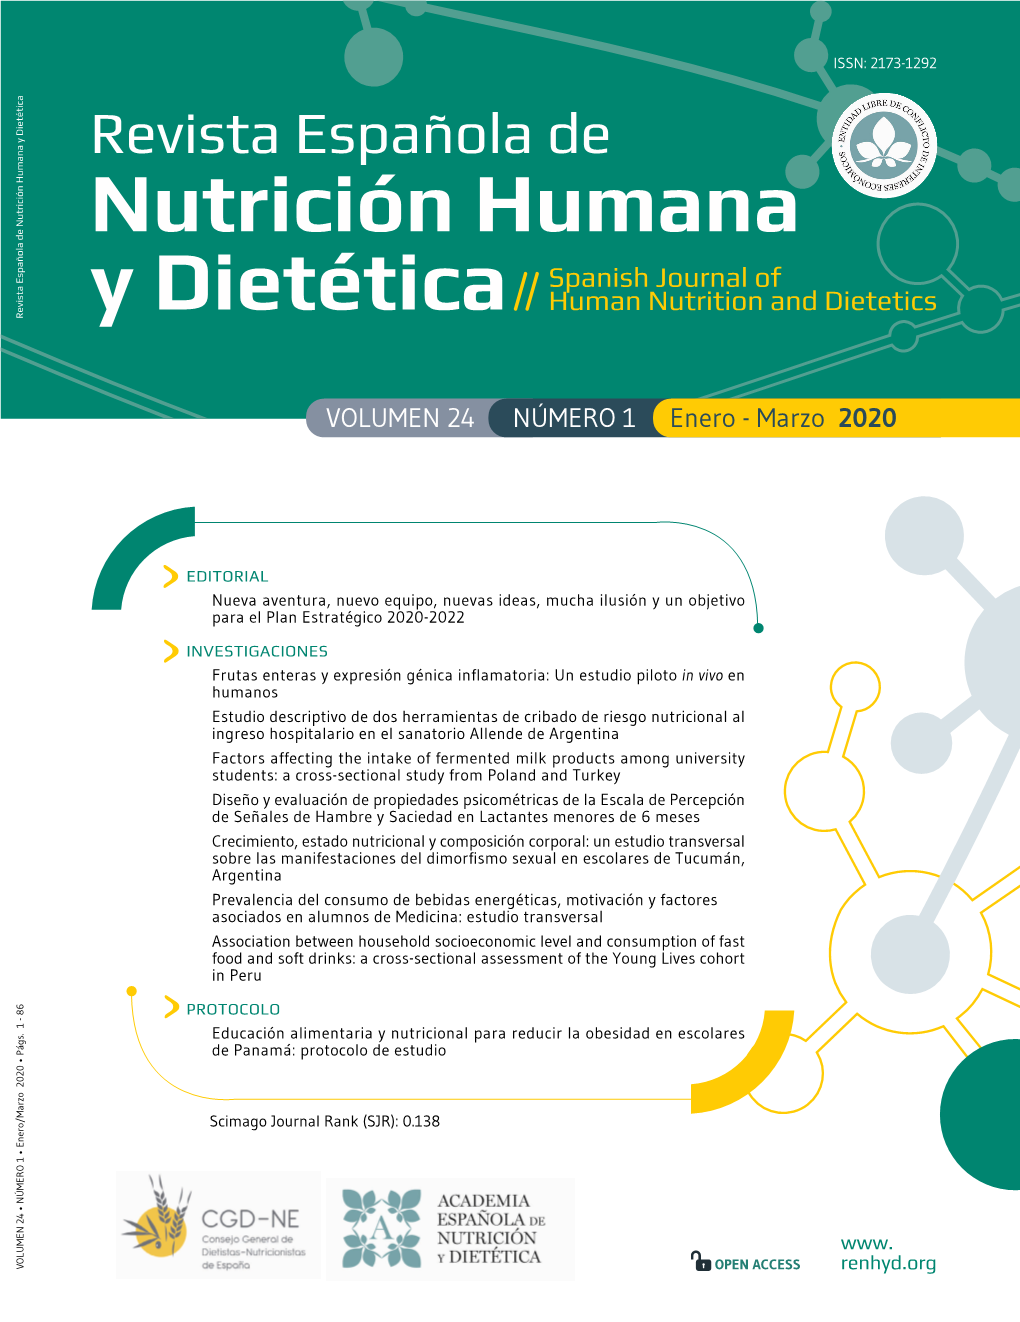 Revista Española De Nutrición Humana Y Dietética Spanish Journal of Human Nutrition and Dietetics